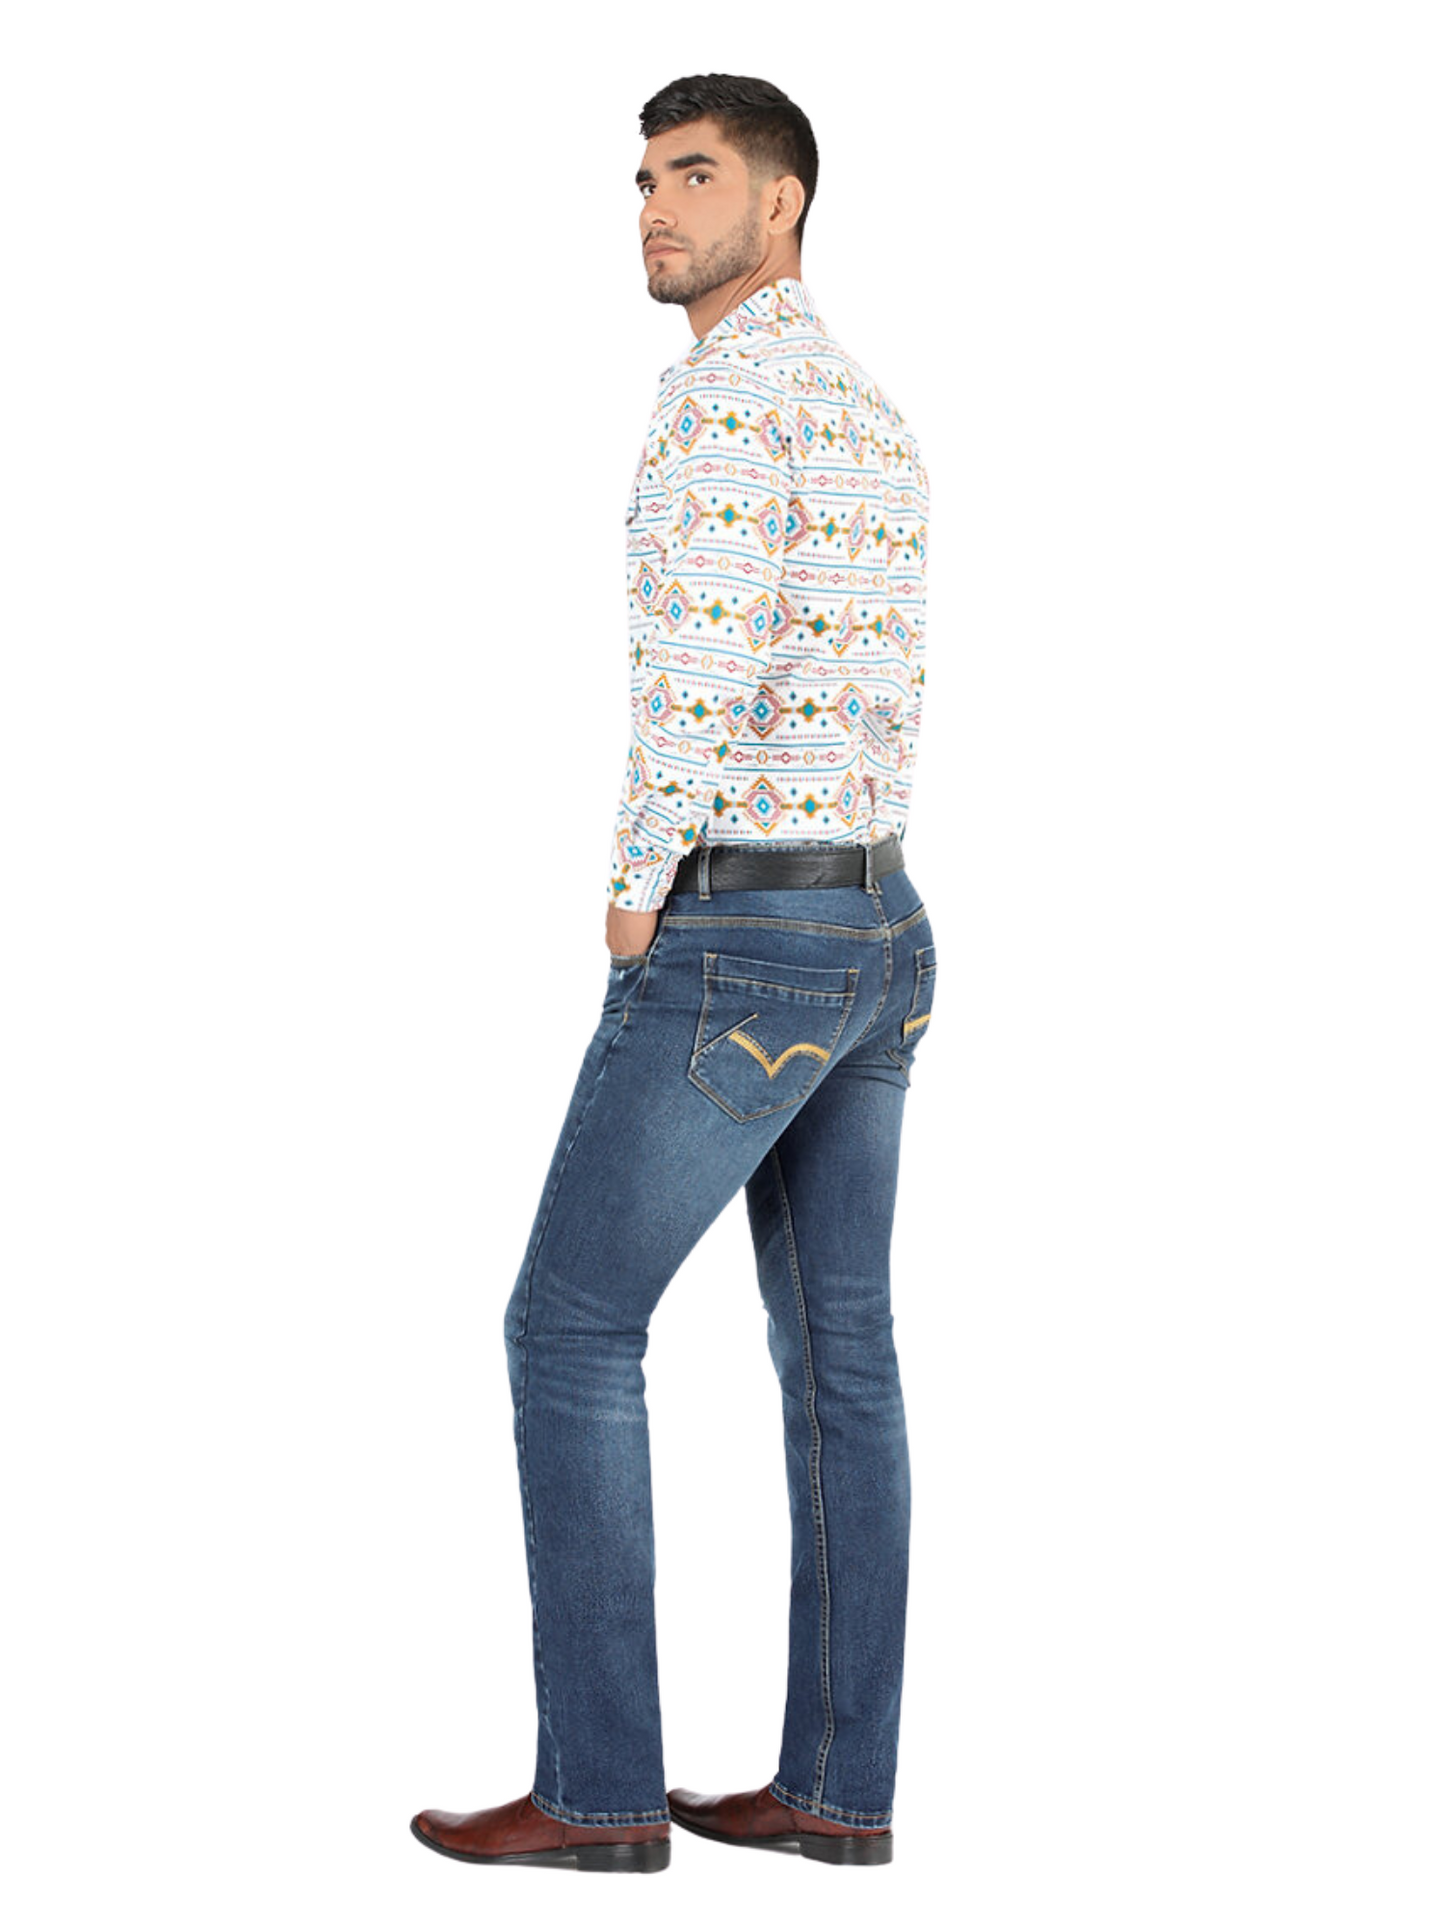 Stretch Denim Jeans for Men 'Montero' - ID: 5306 Denim Jeans Montero